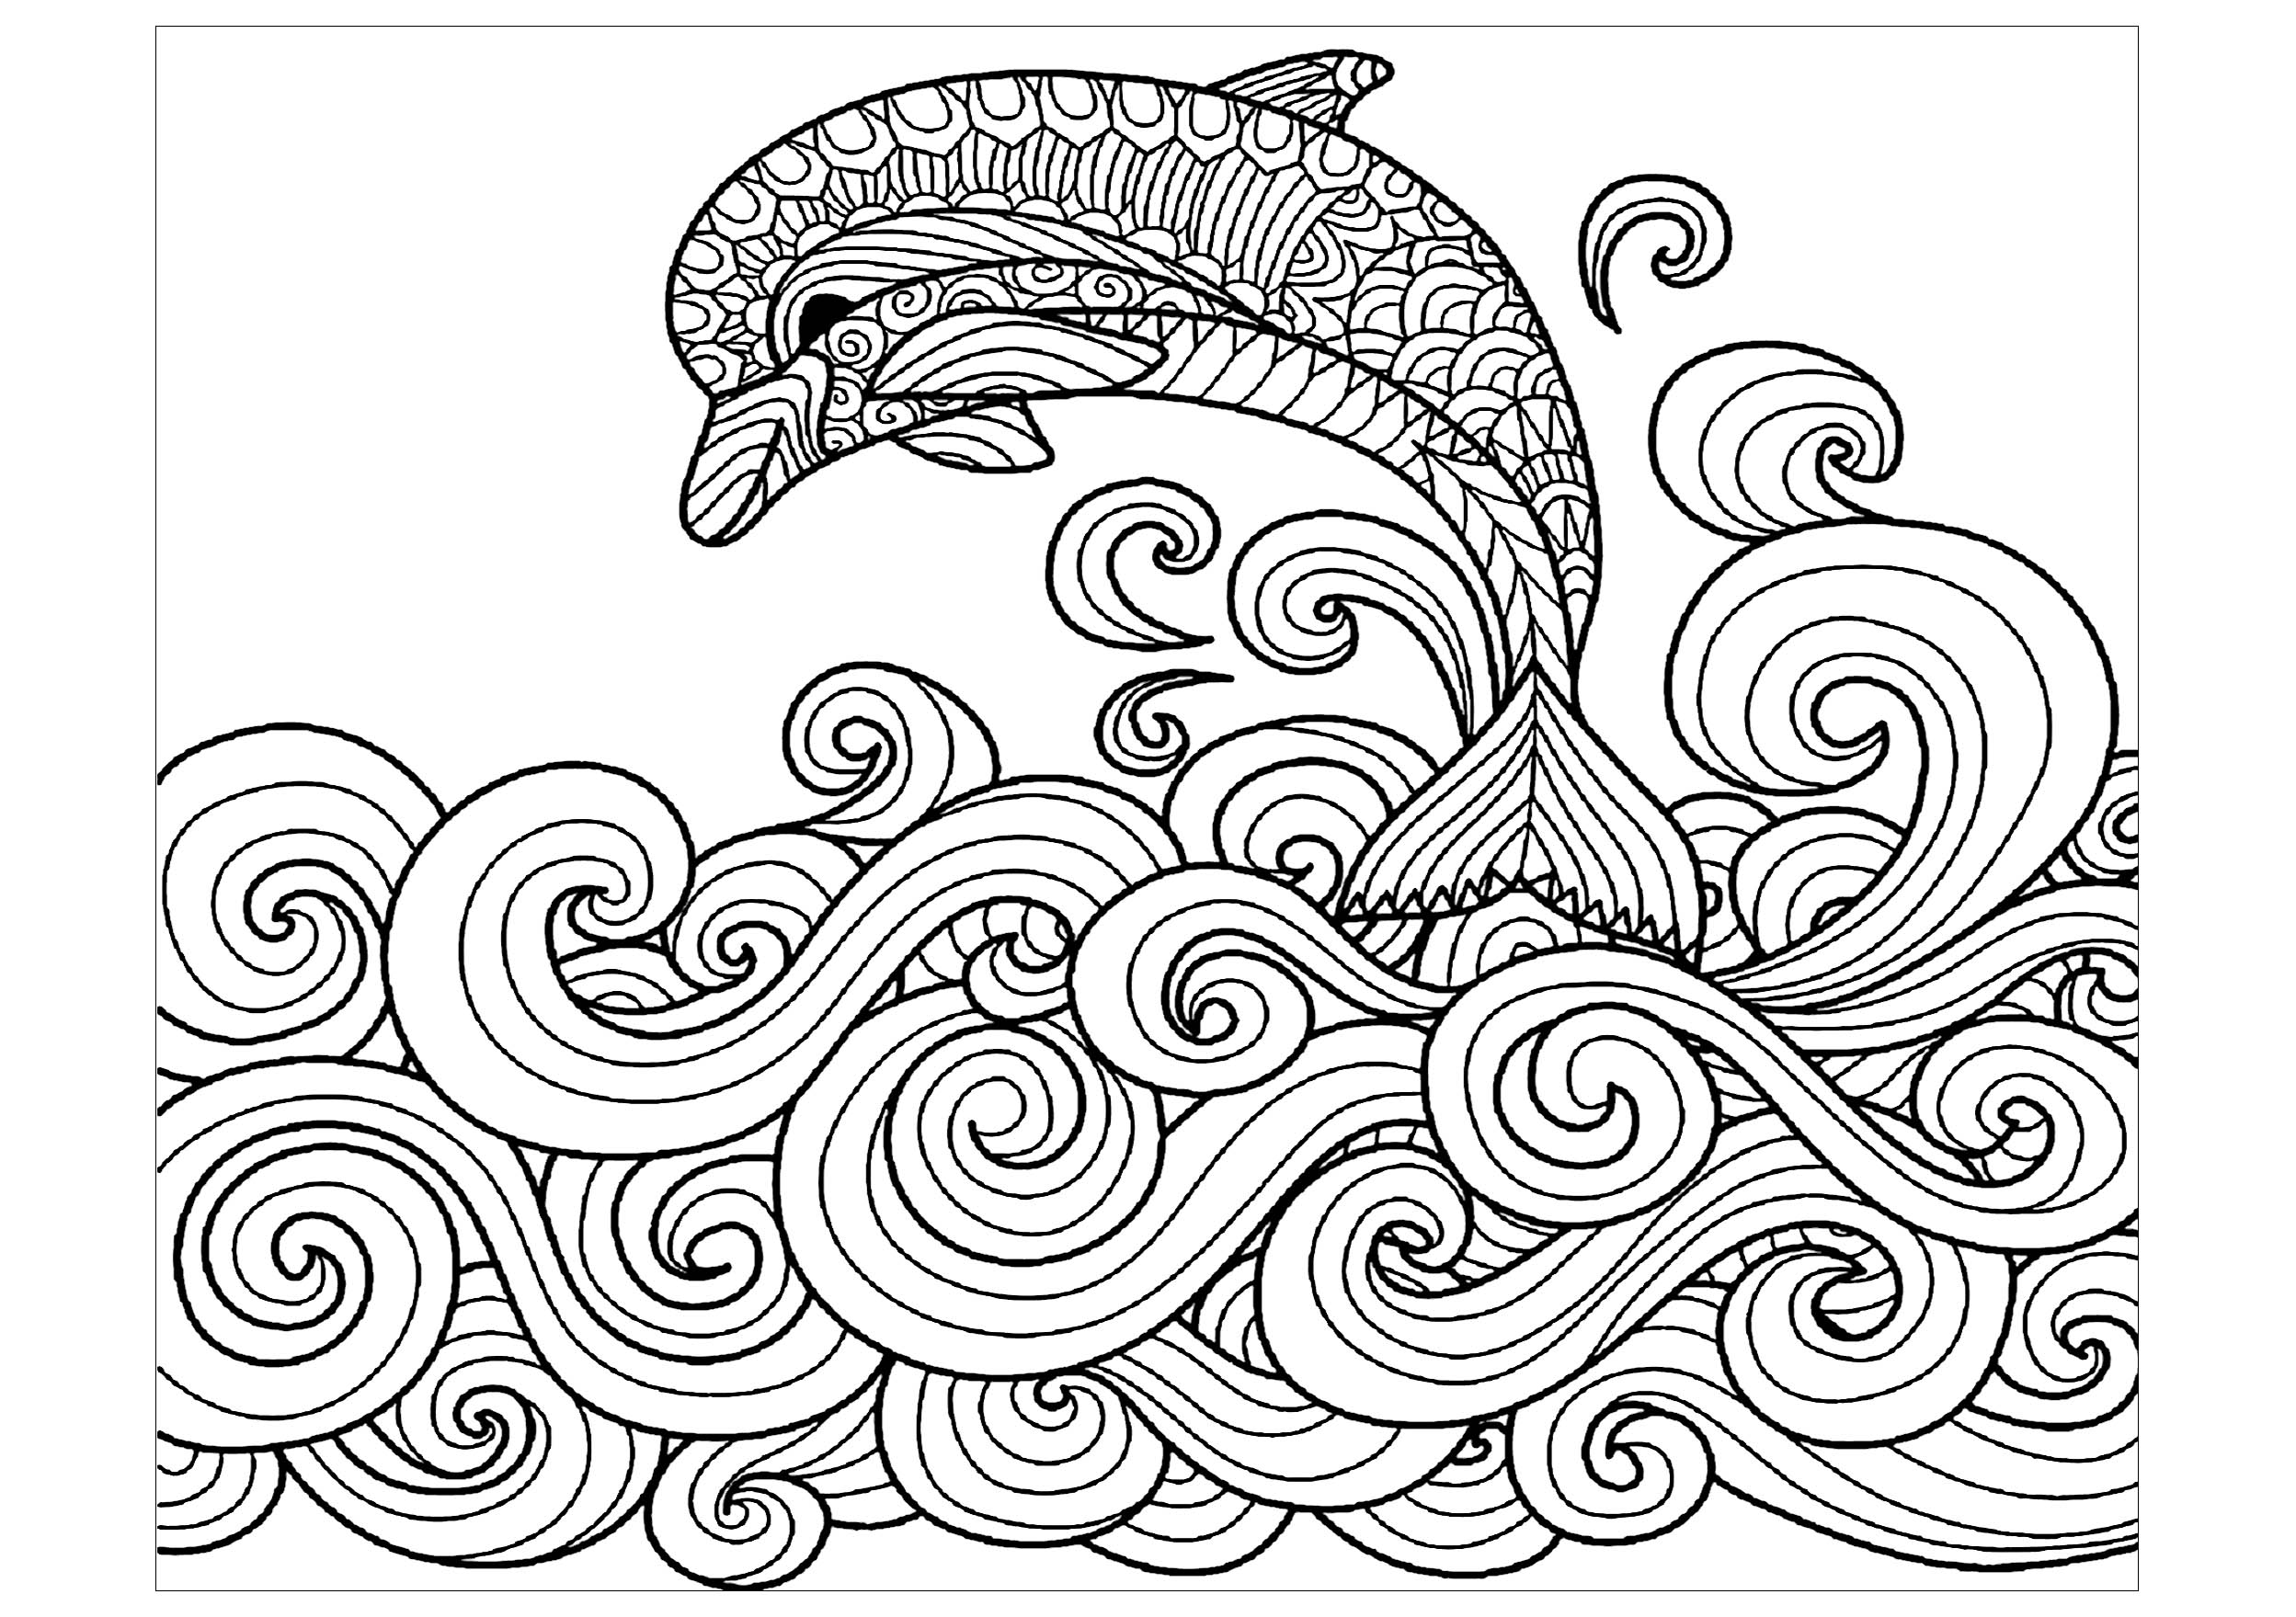 Coloring page : Dolphins - 1, Source : 123rf   Artist : Bimdeedee